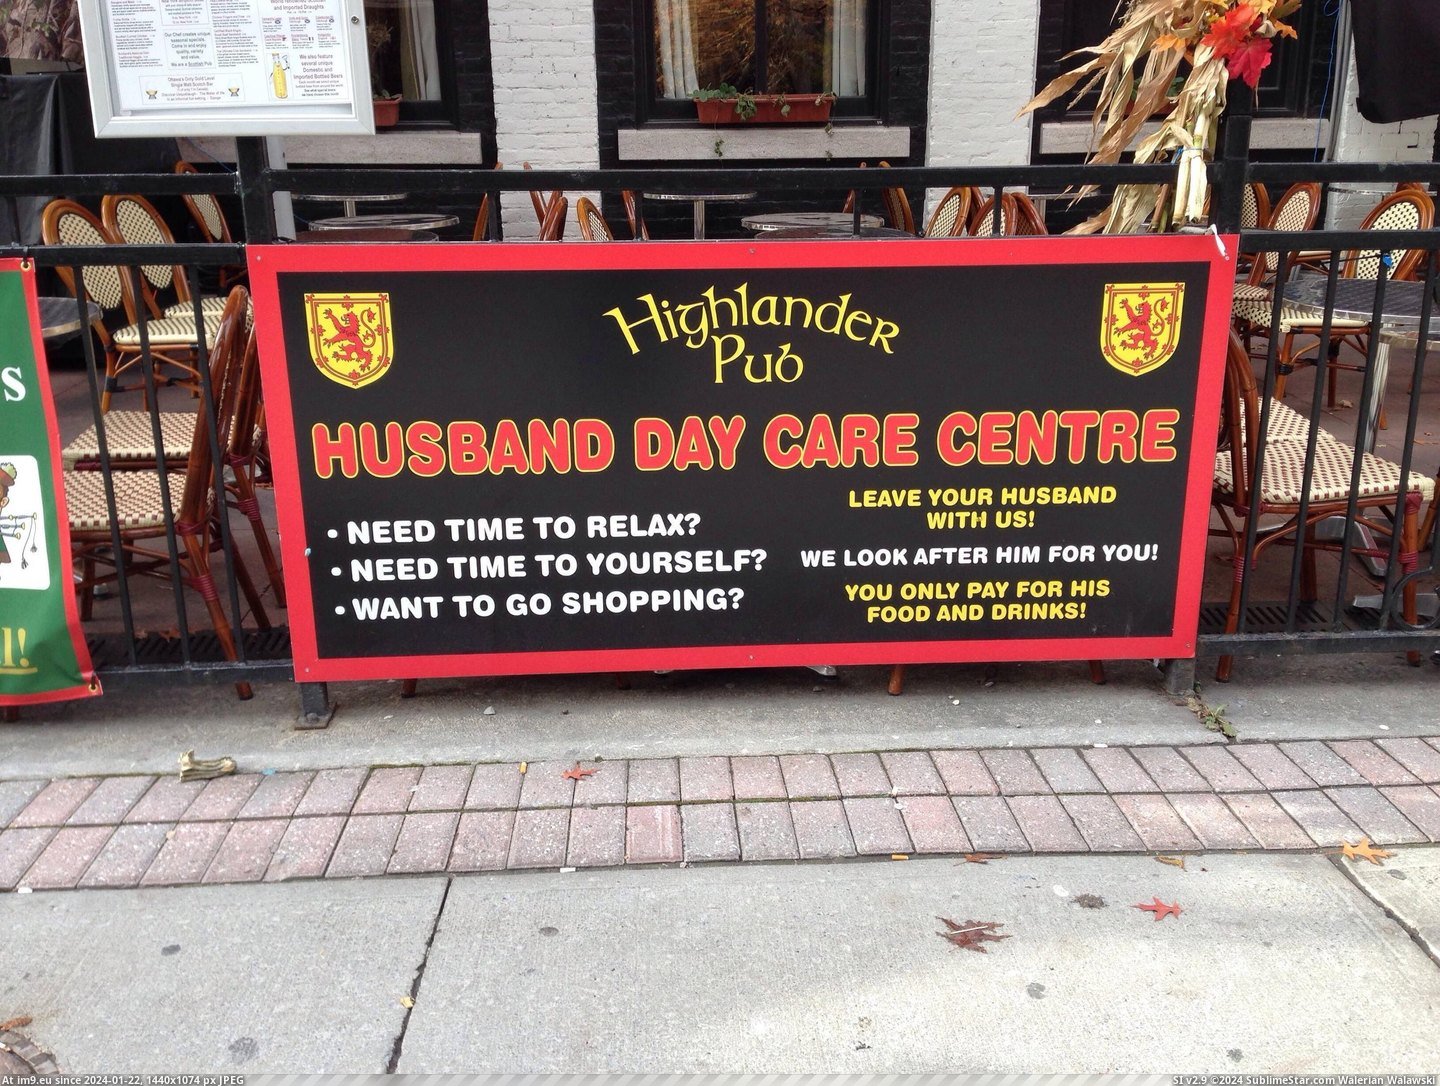 #Funny #Day #Centre #Husband #Care [Funny] Husband day care centre Pic. (Bild von album My r/FUNNY favs))